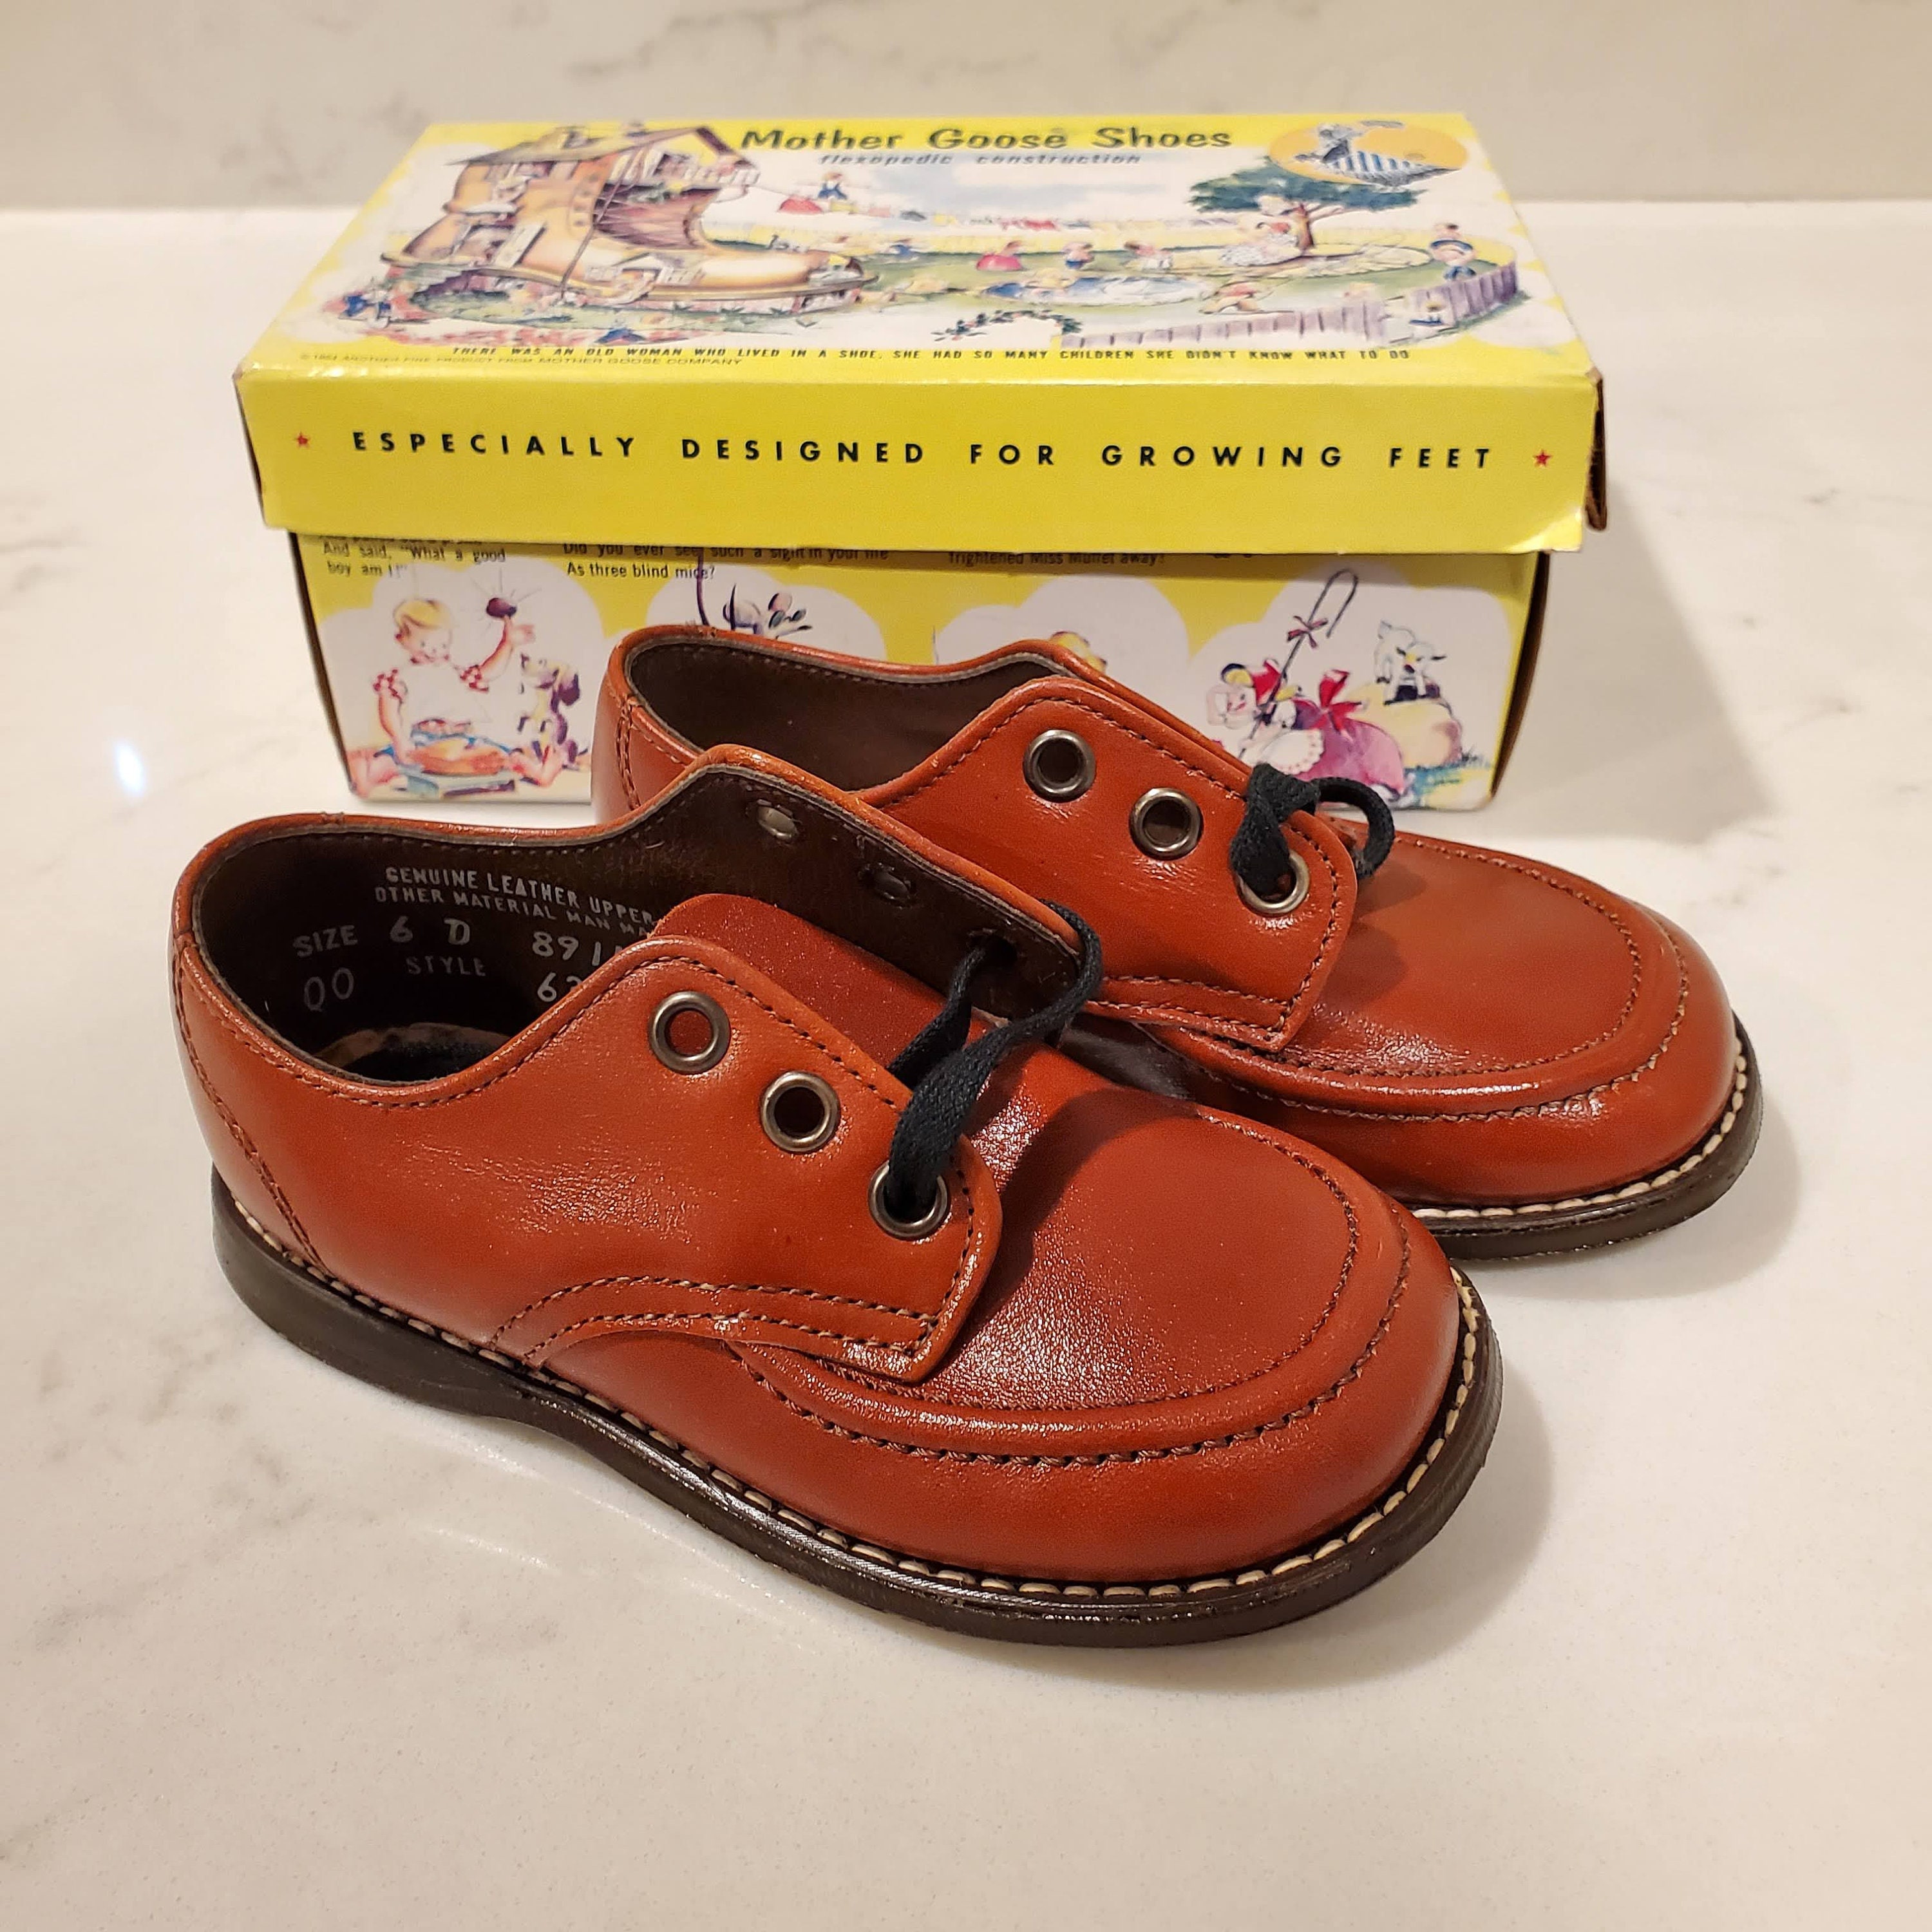 New in Box Ortopédico Back to School Size 6D Christmas Shoes Vintage Boys Brown Leather Shoes by Mother Goose Zapatos Zapatos para niño Oxford y con punto en ala 